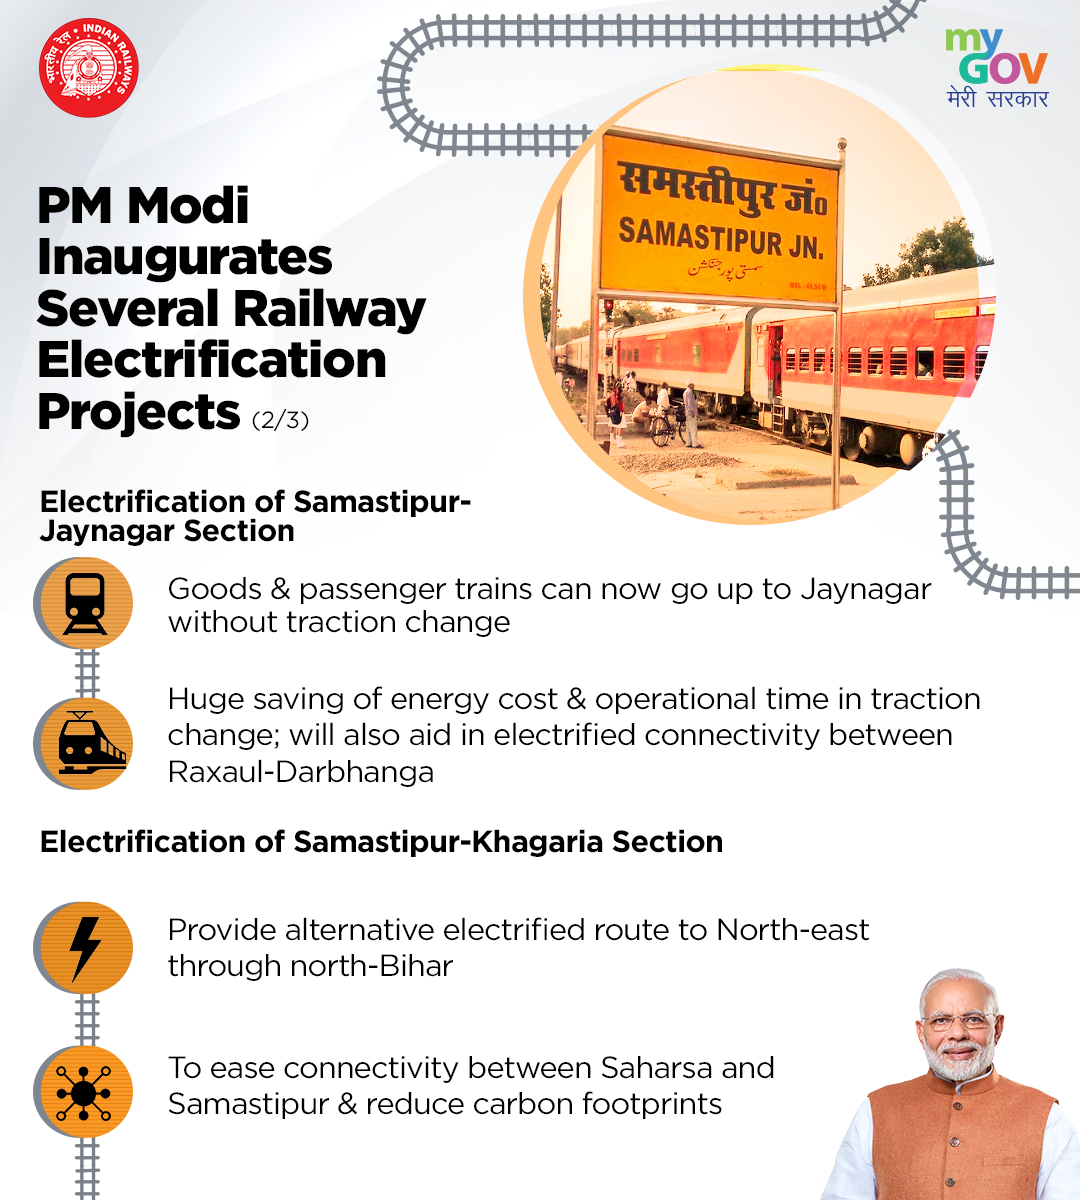 PM Modi Inaugurates Several Railway Electrification Projects (2/3) #AatmaNirbharBihar #BiharKaPragatiPath